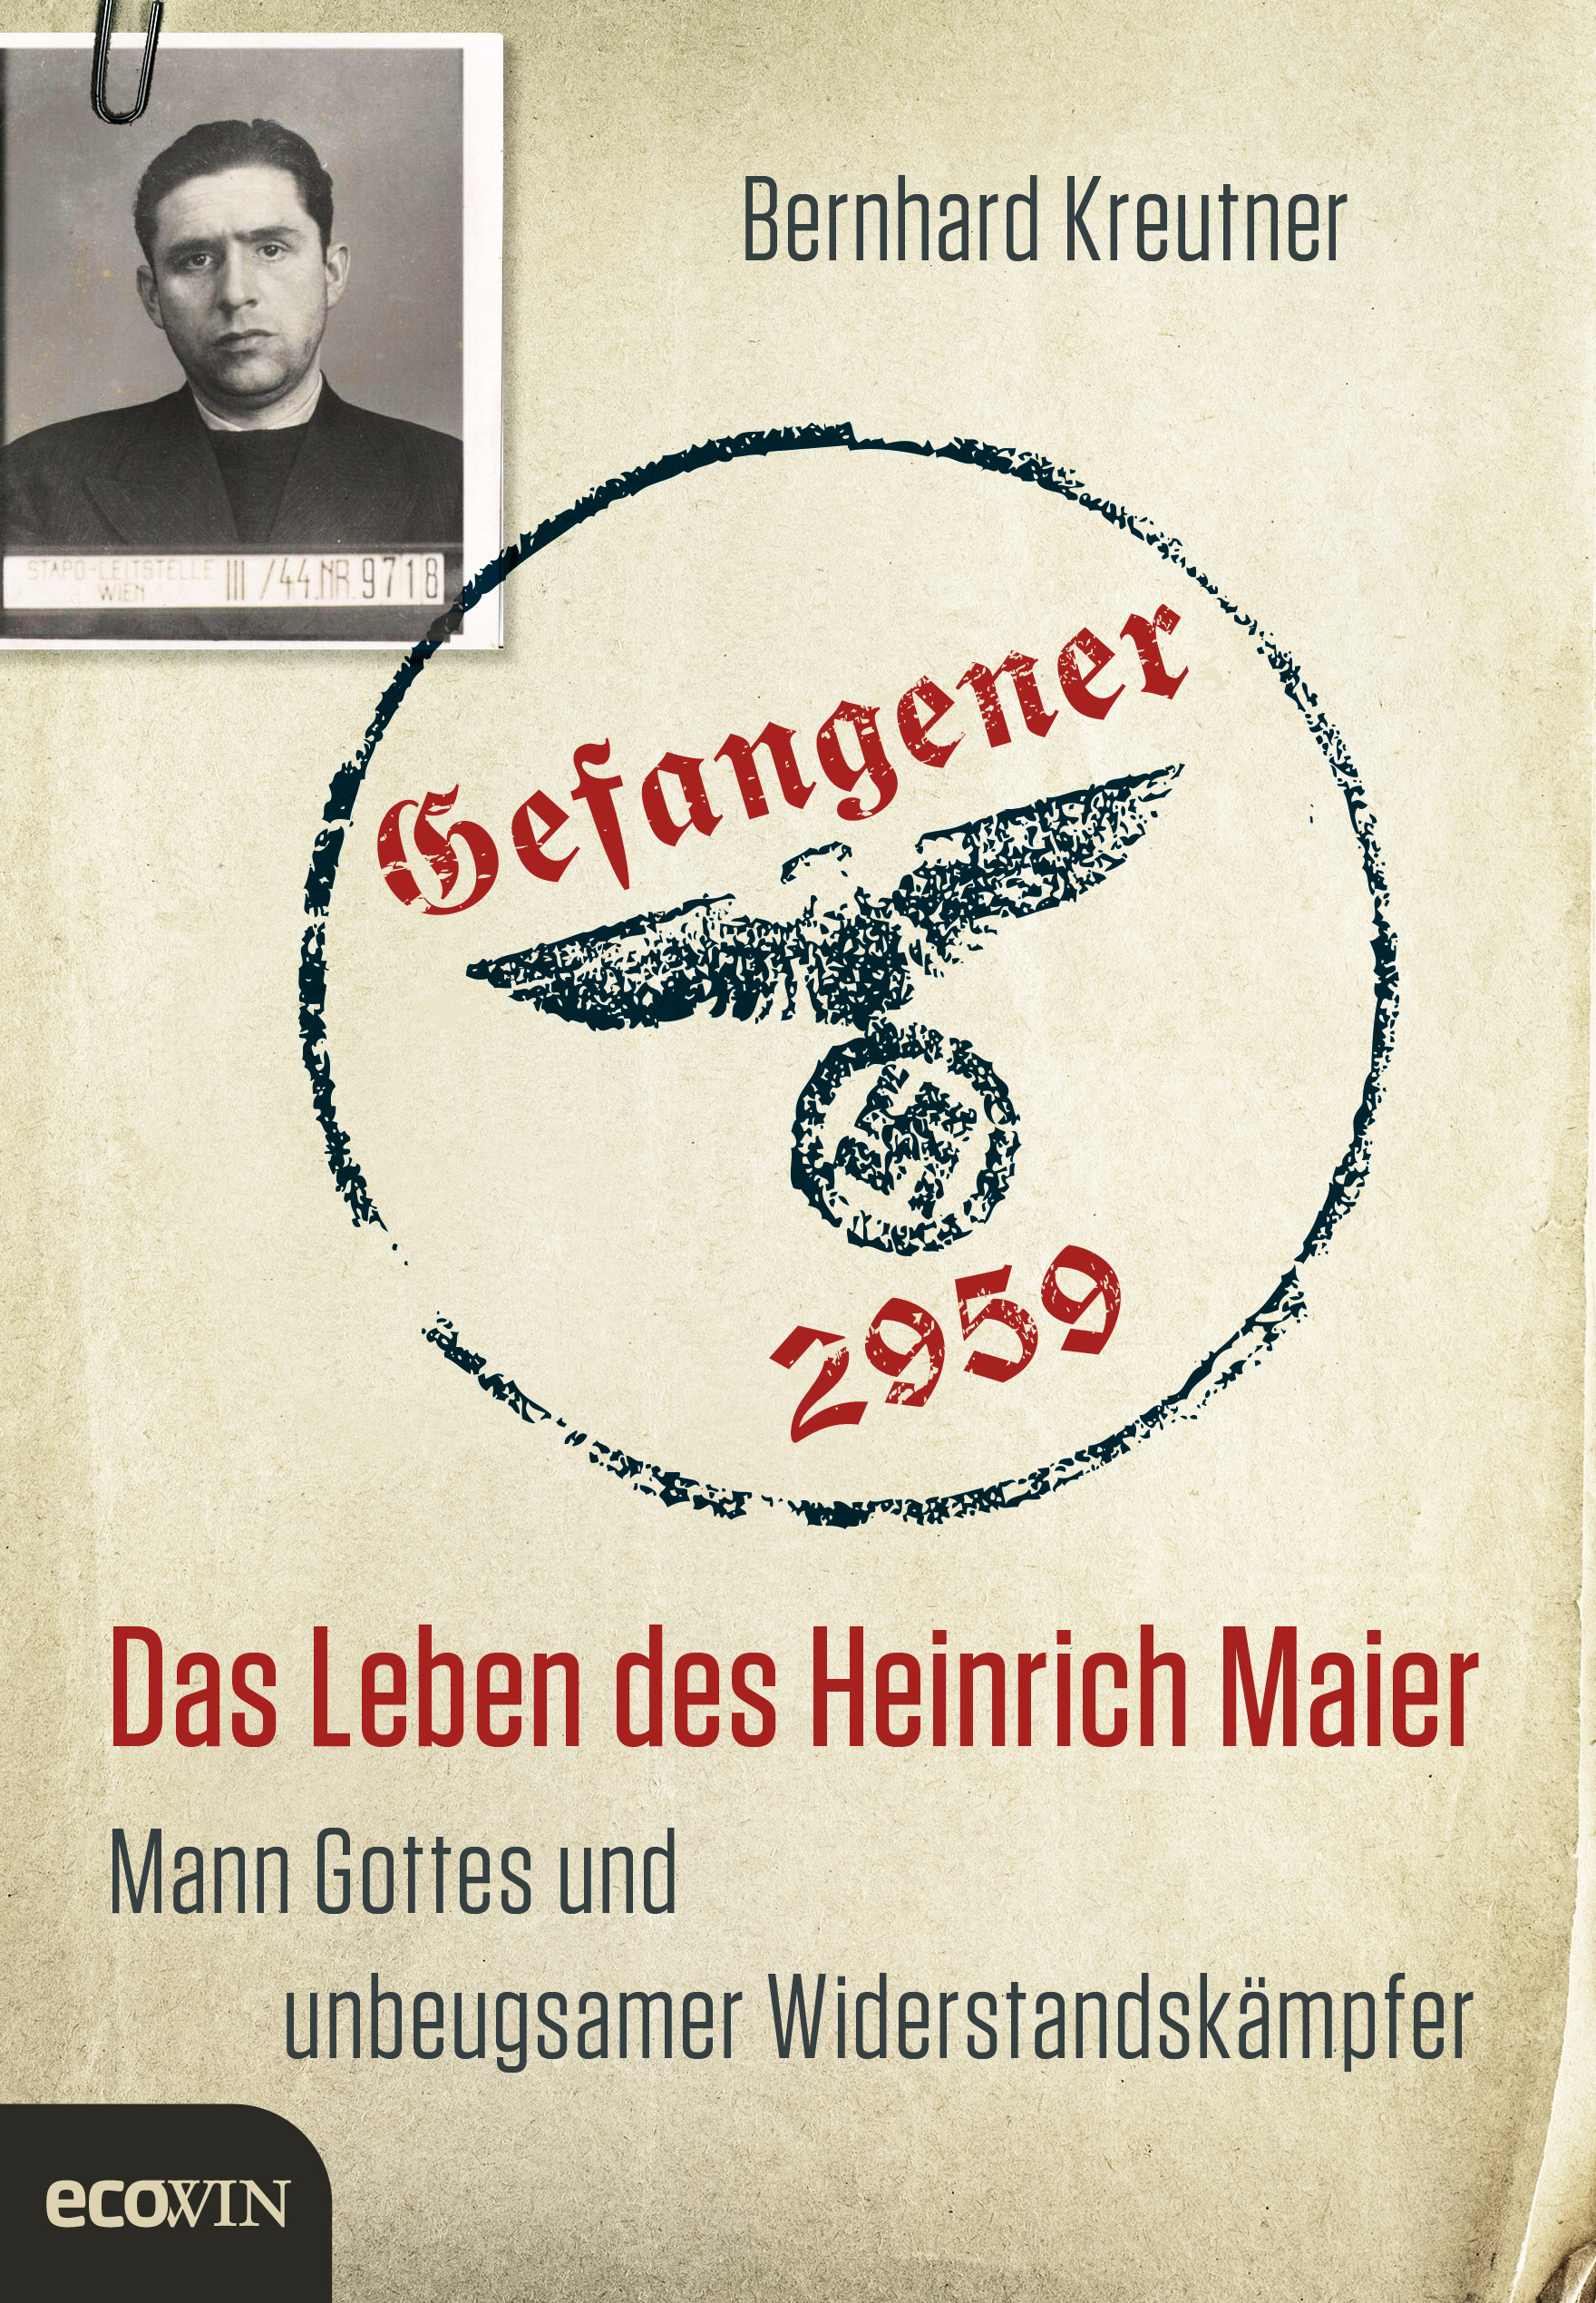 Bernhard Kreutner: Gefangener 2959